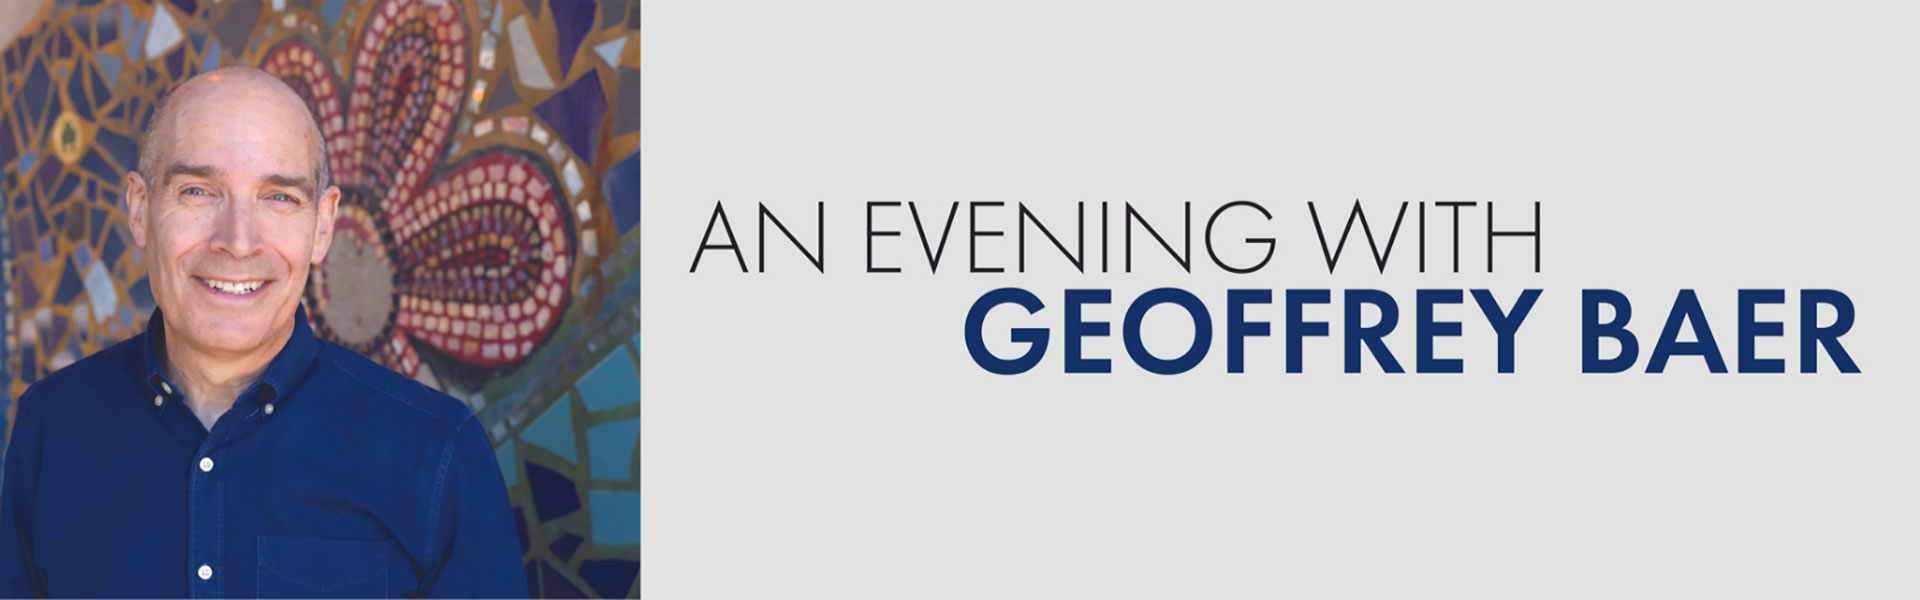 An Evening with Geoffrey Baer